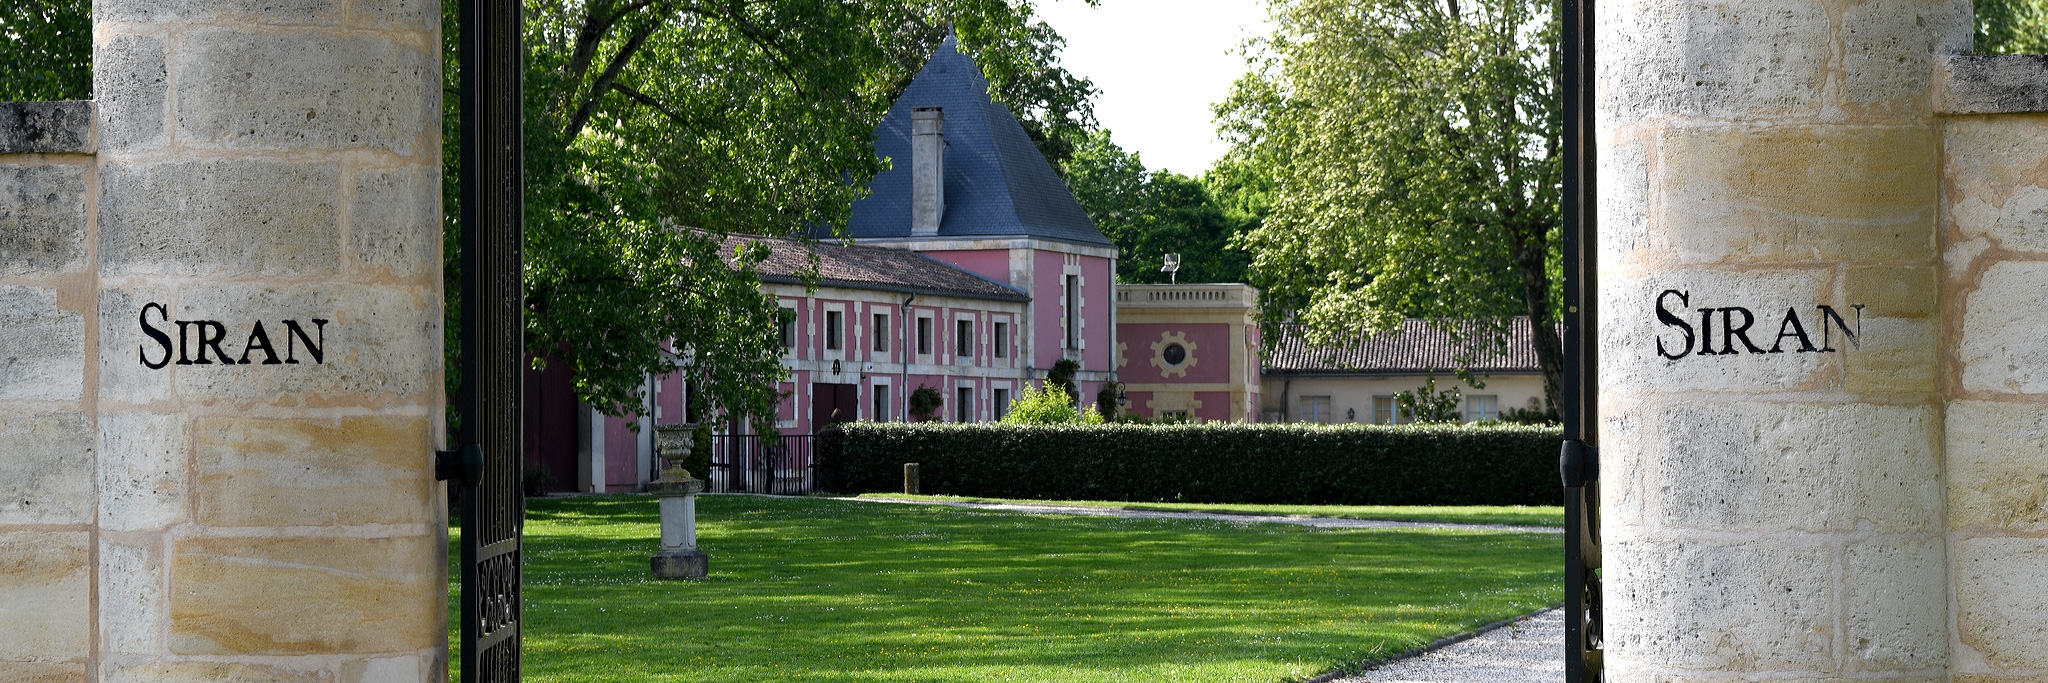 Chateau Siran